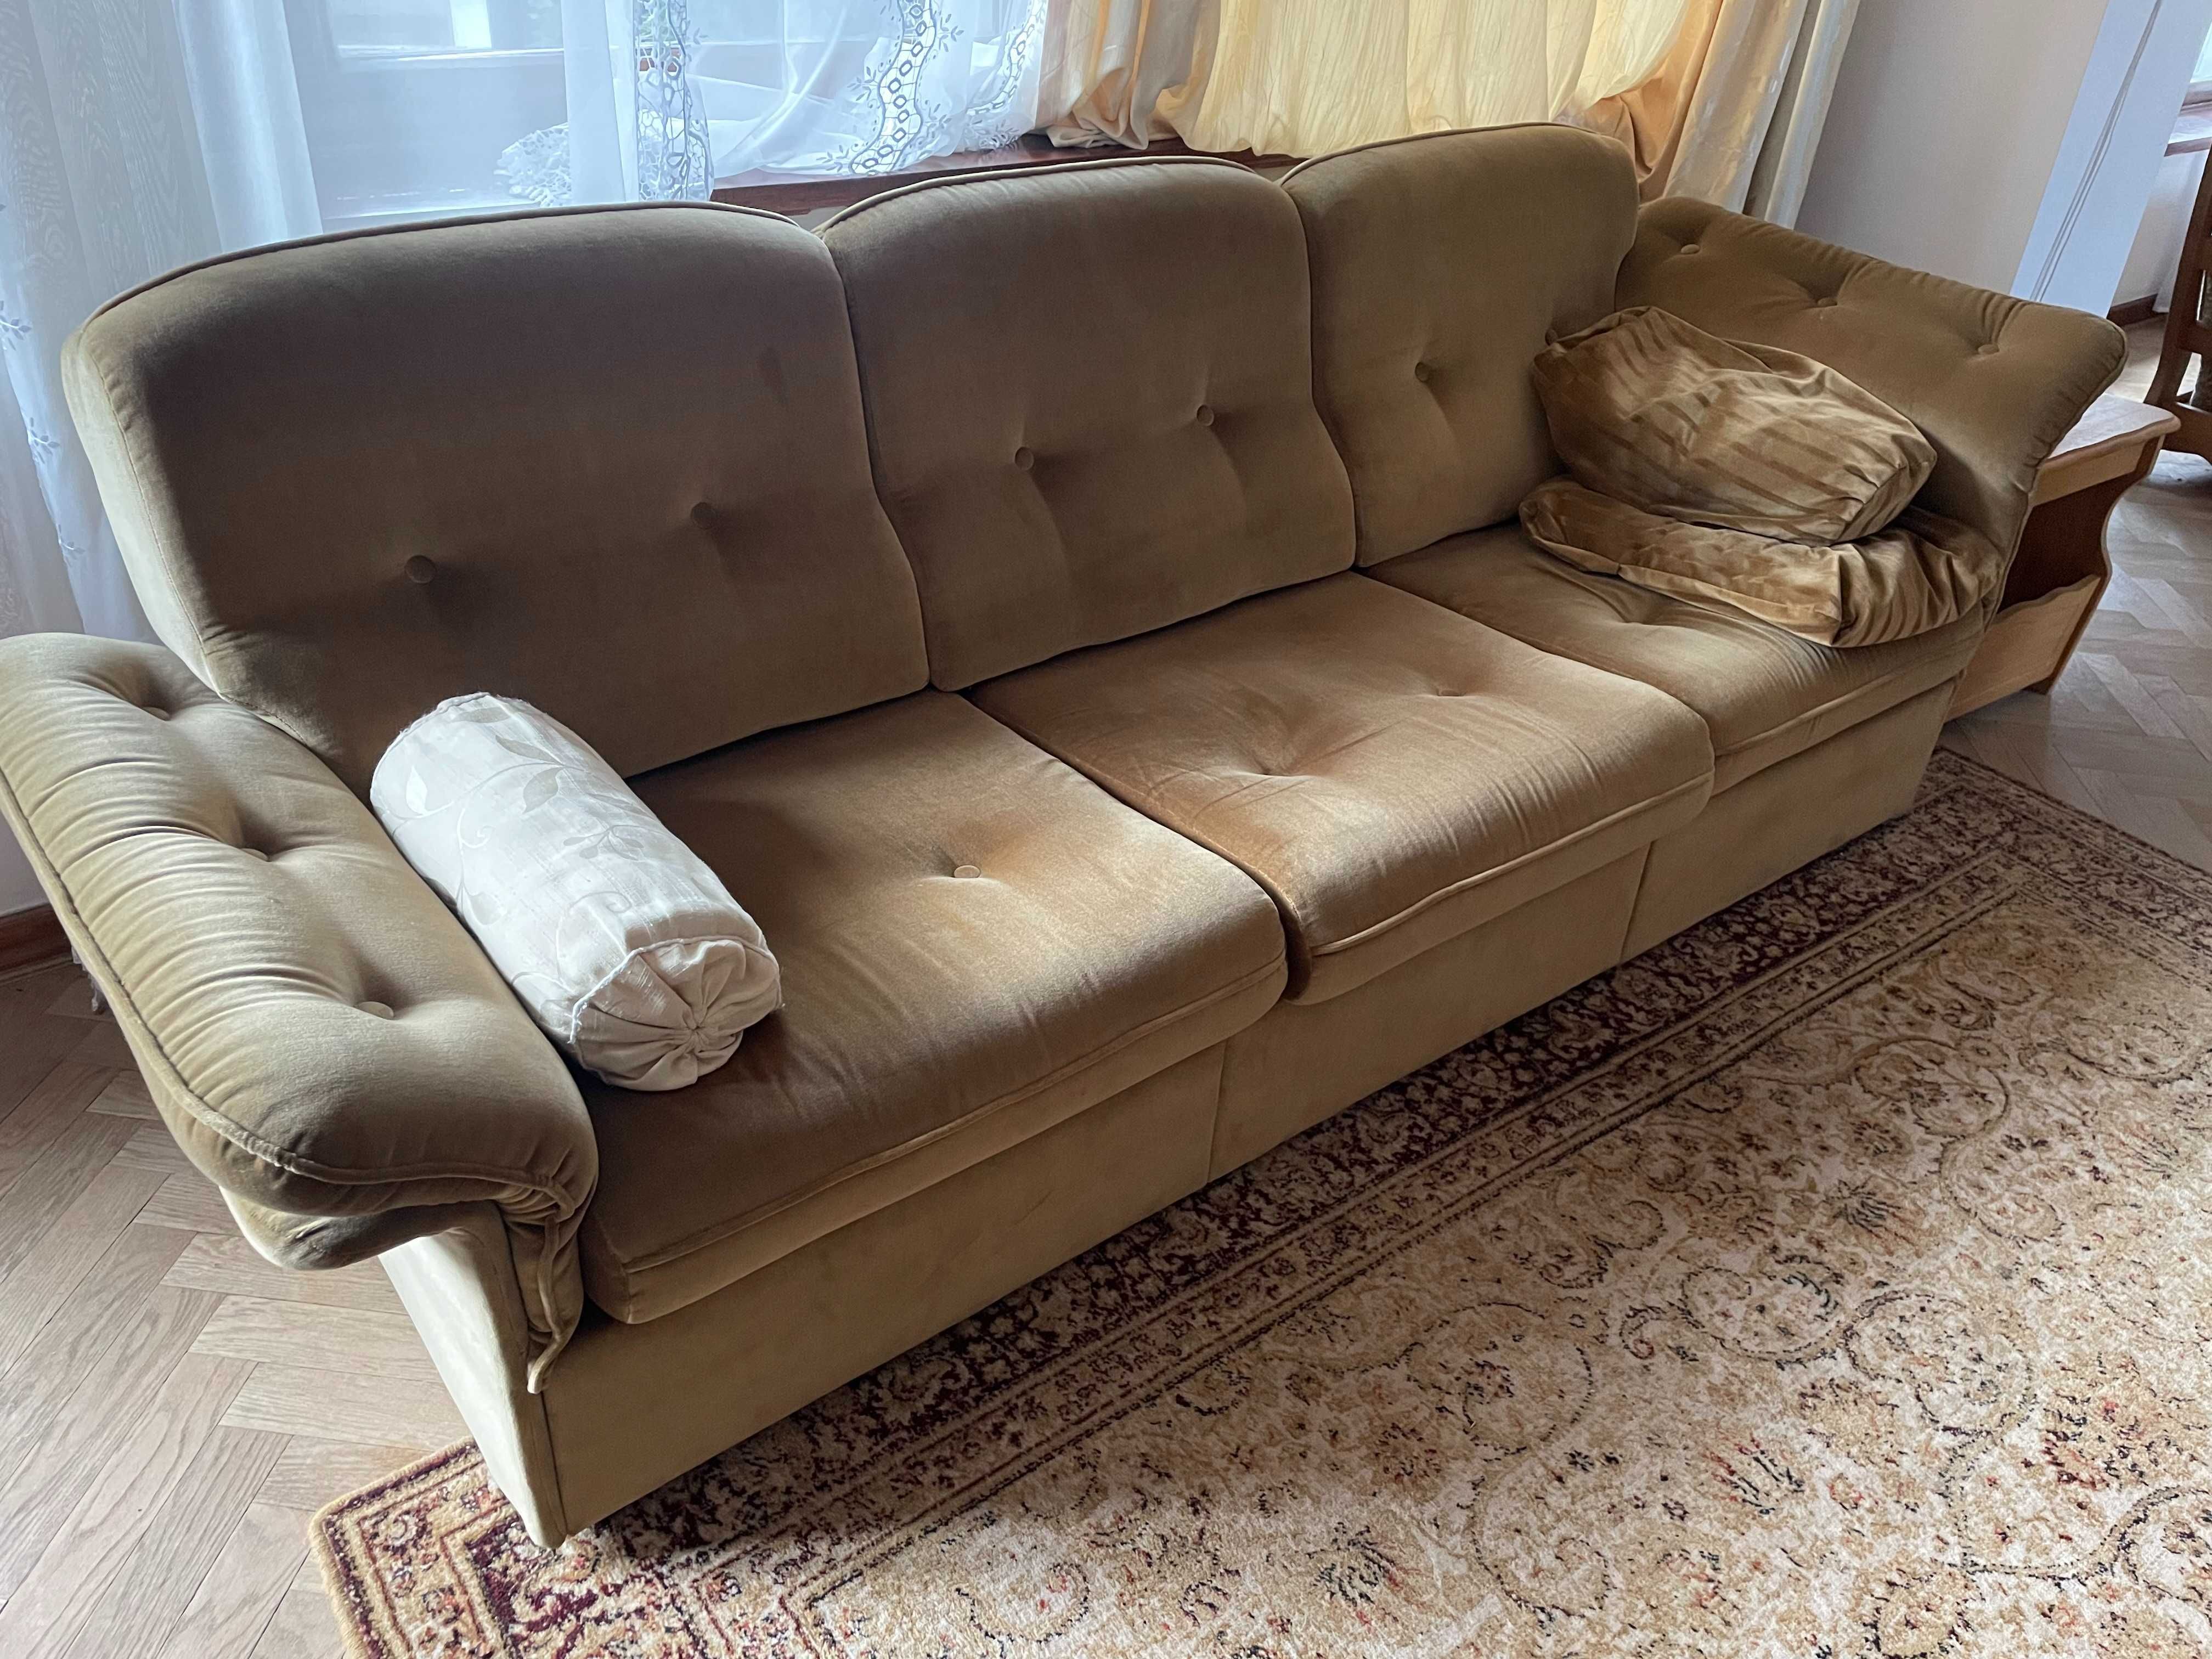 Sofa i dwa fotele: retro, vintage